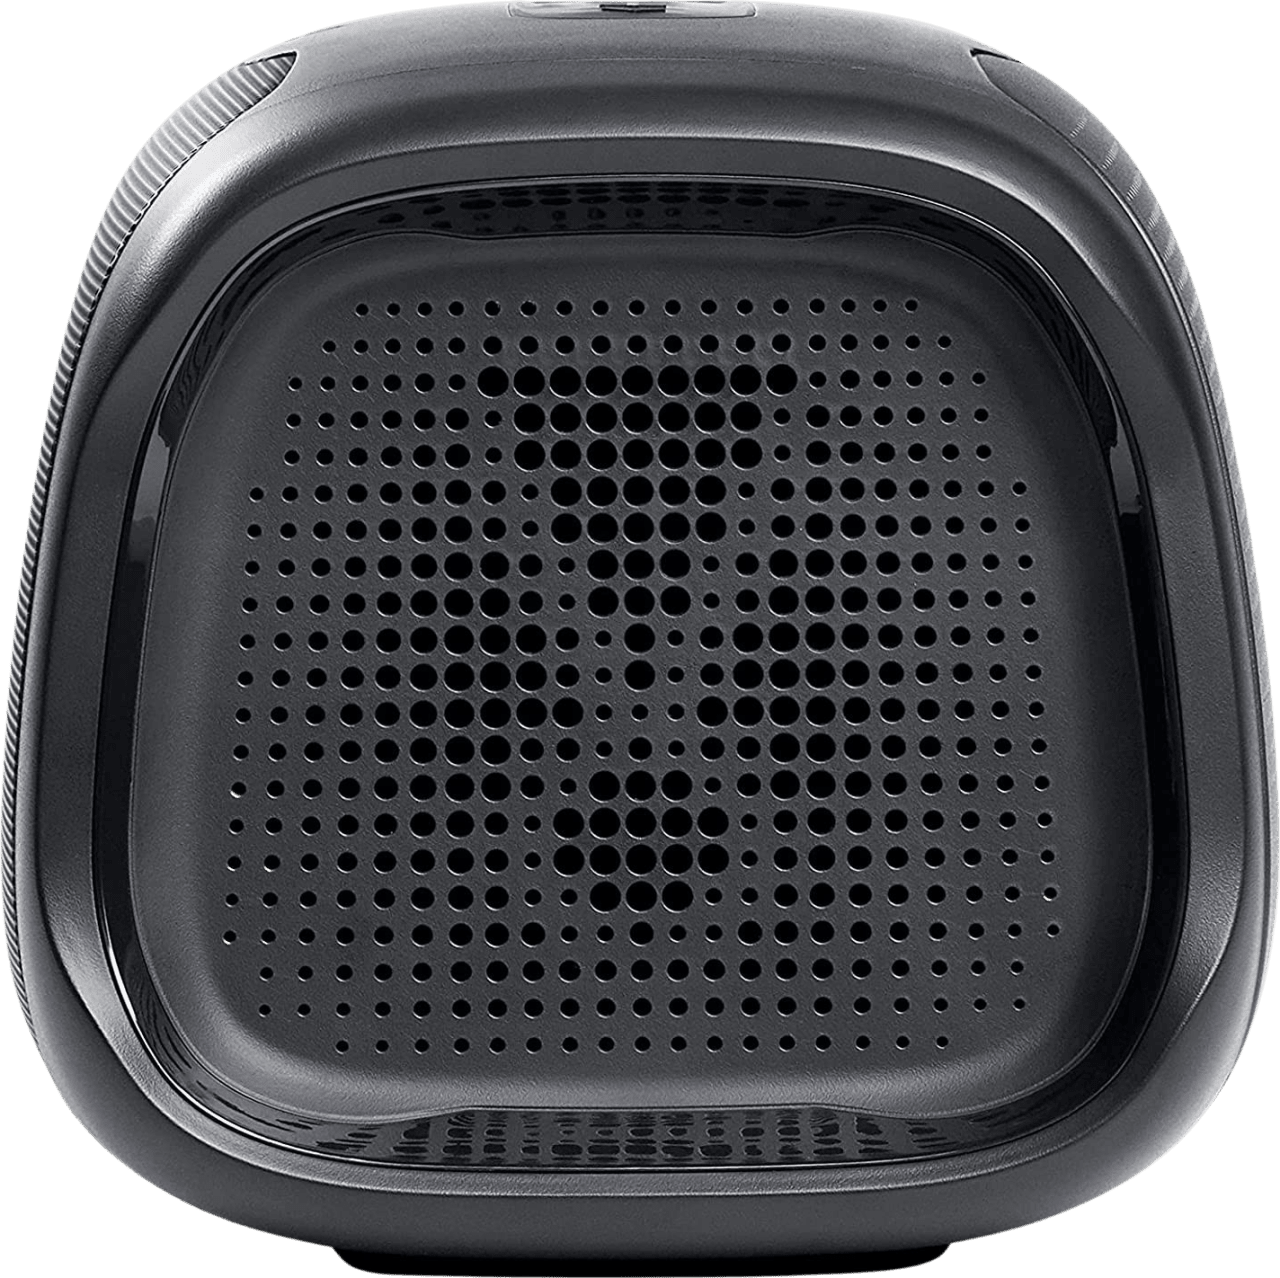 Black JBL BASSPRO GO Portable Bluetooth Party Speaker.6